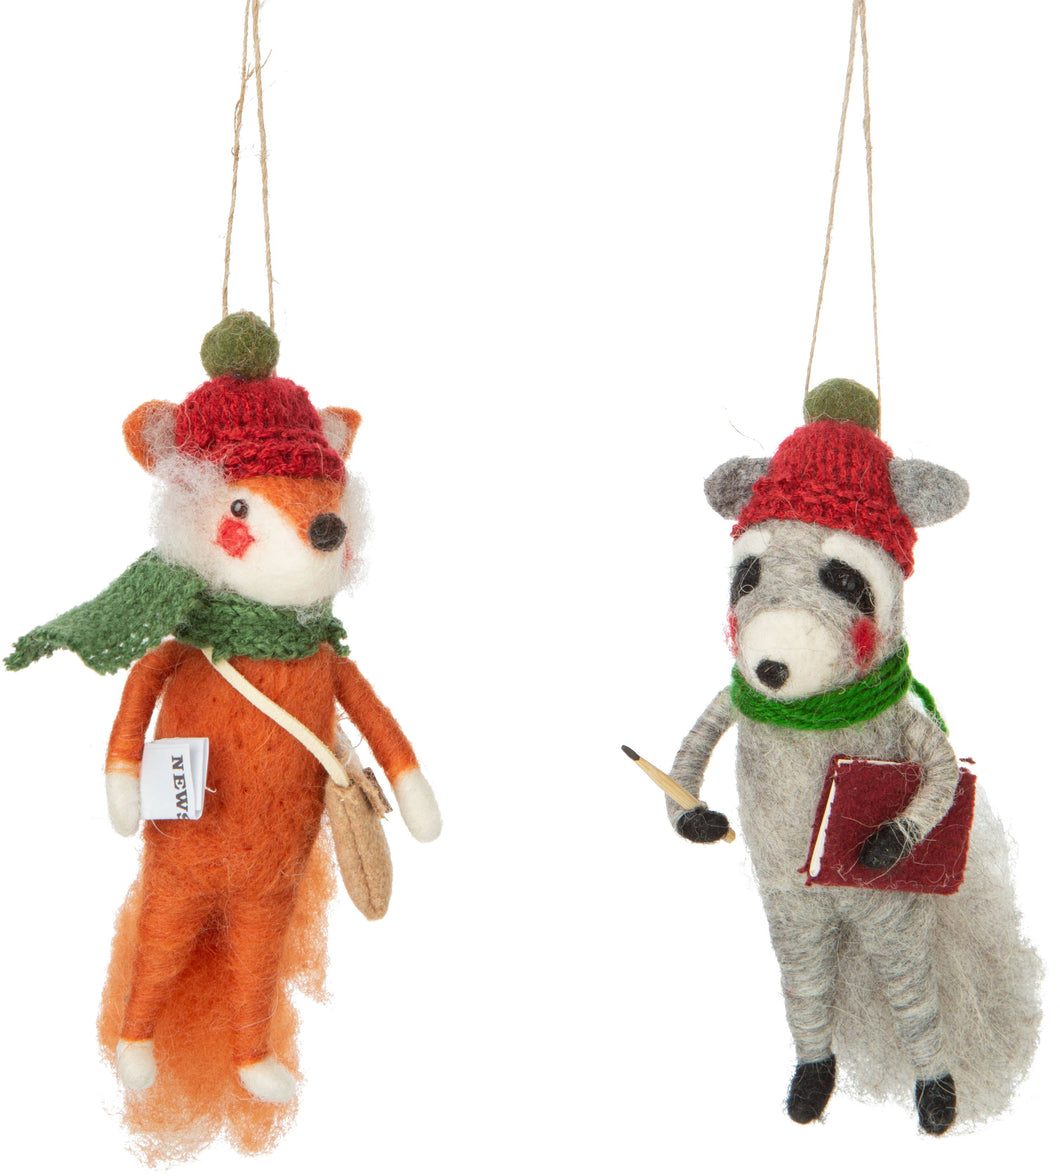 Felt raccoon and fox ornaments